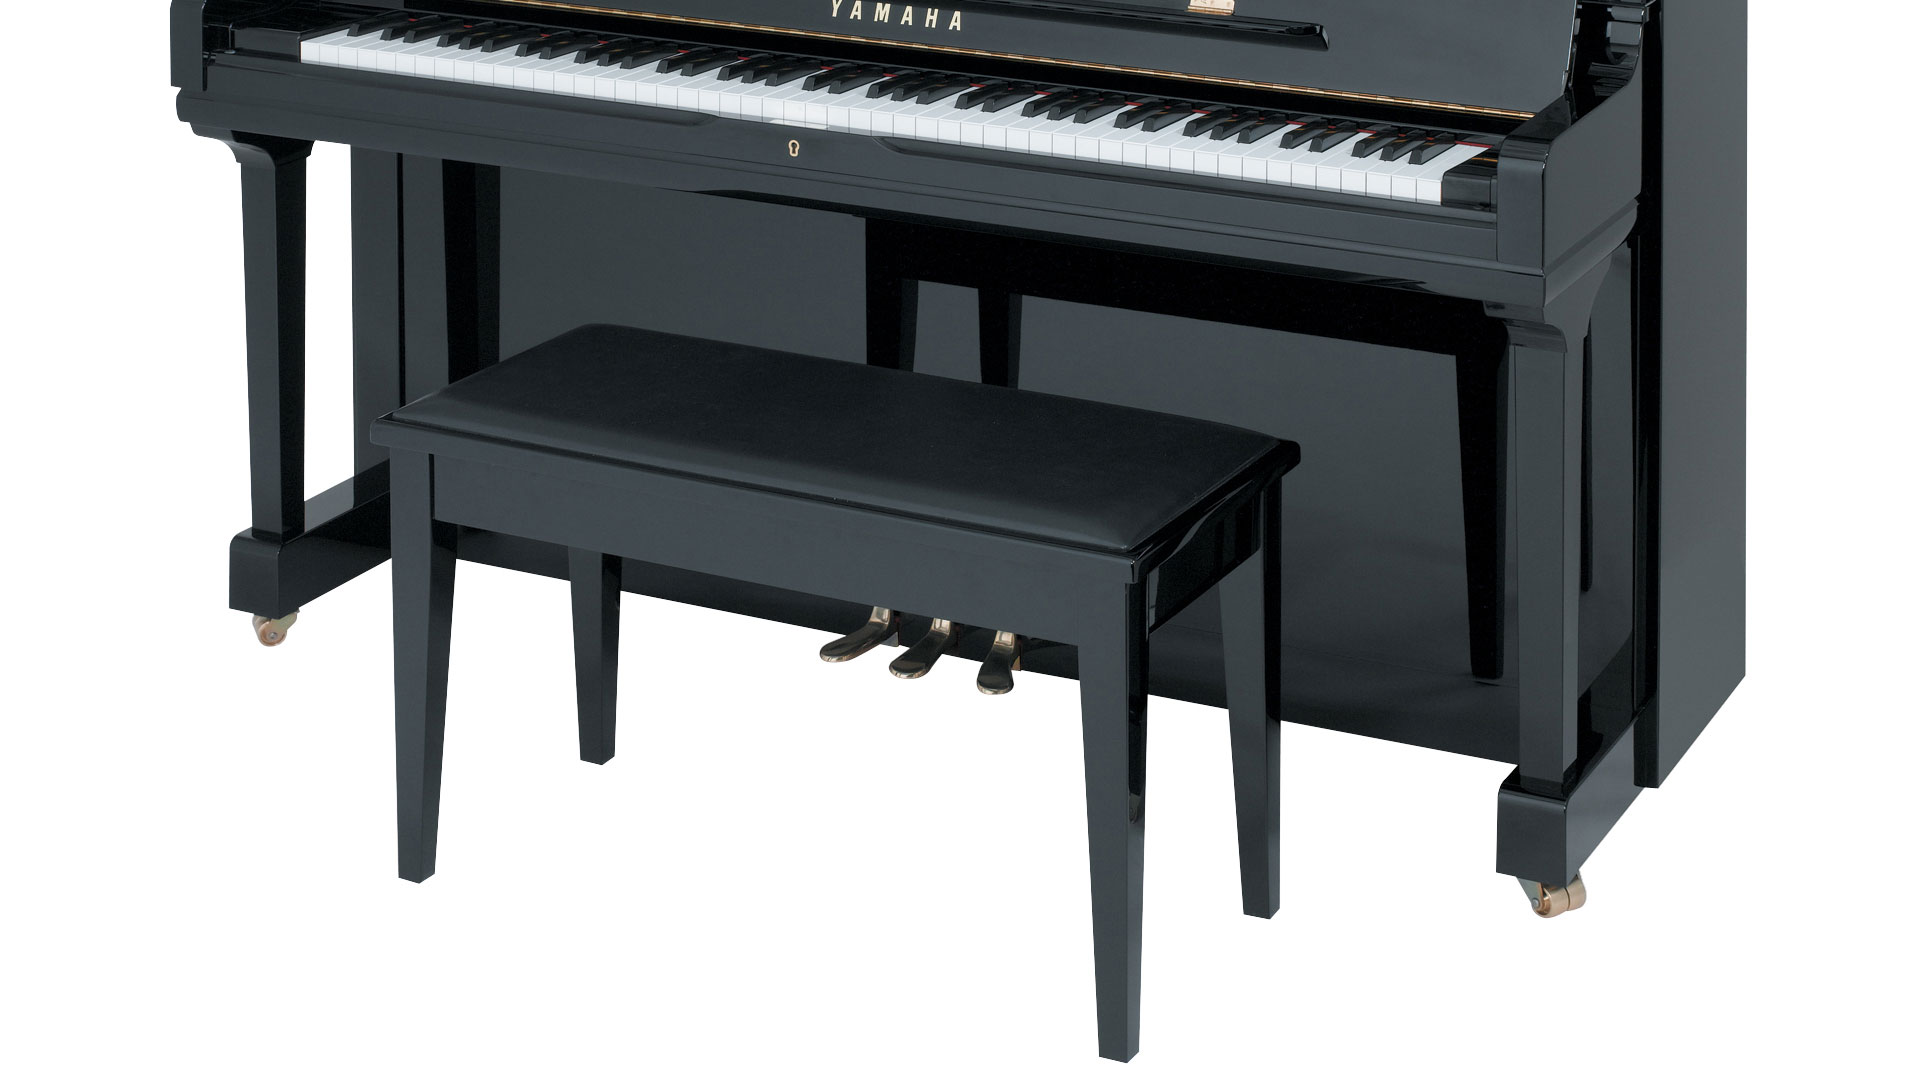 Yamaha piano Model yus3